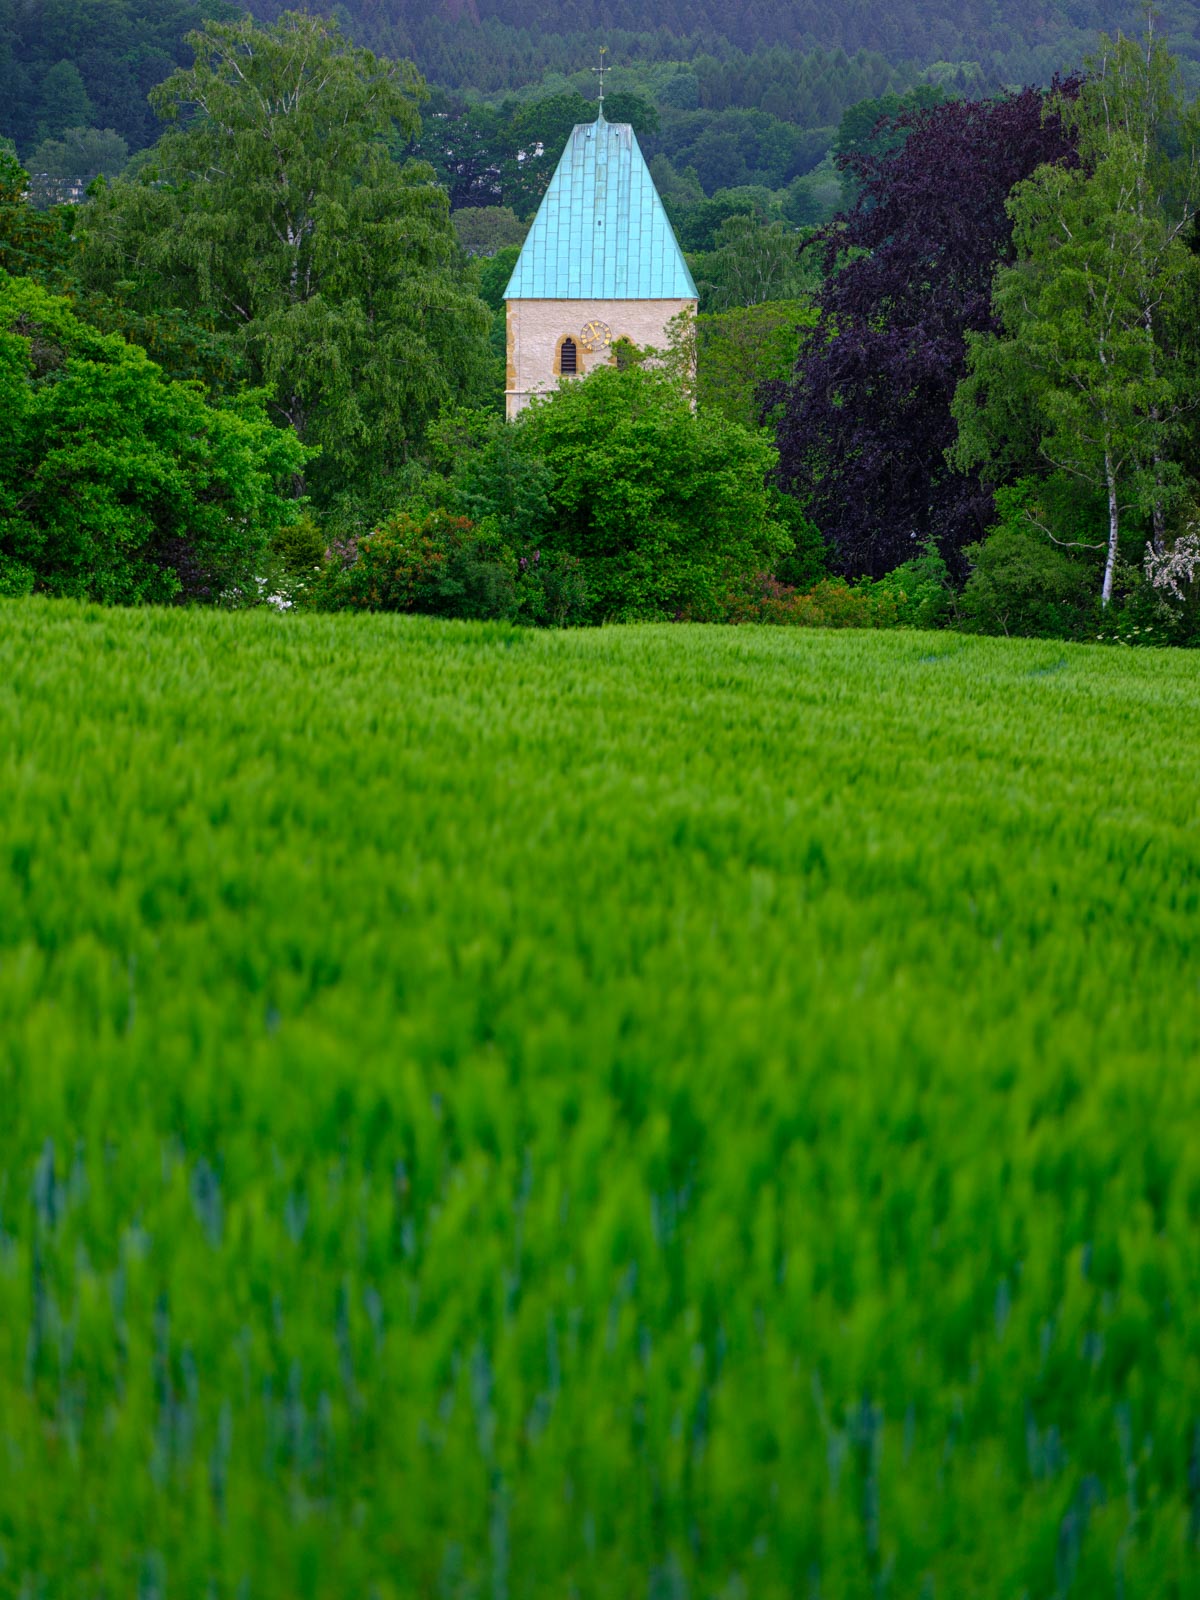 Fields and tower of the church 'St. Peter zu Kirchdornberg' (Bielefeld, Germany).